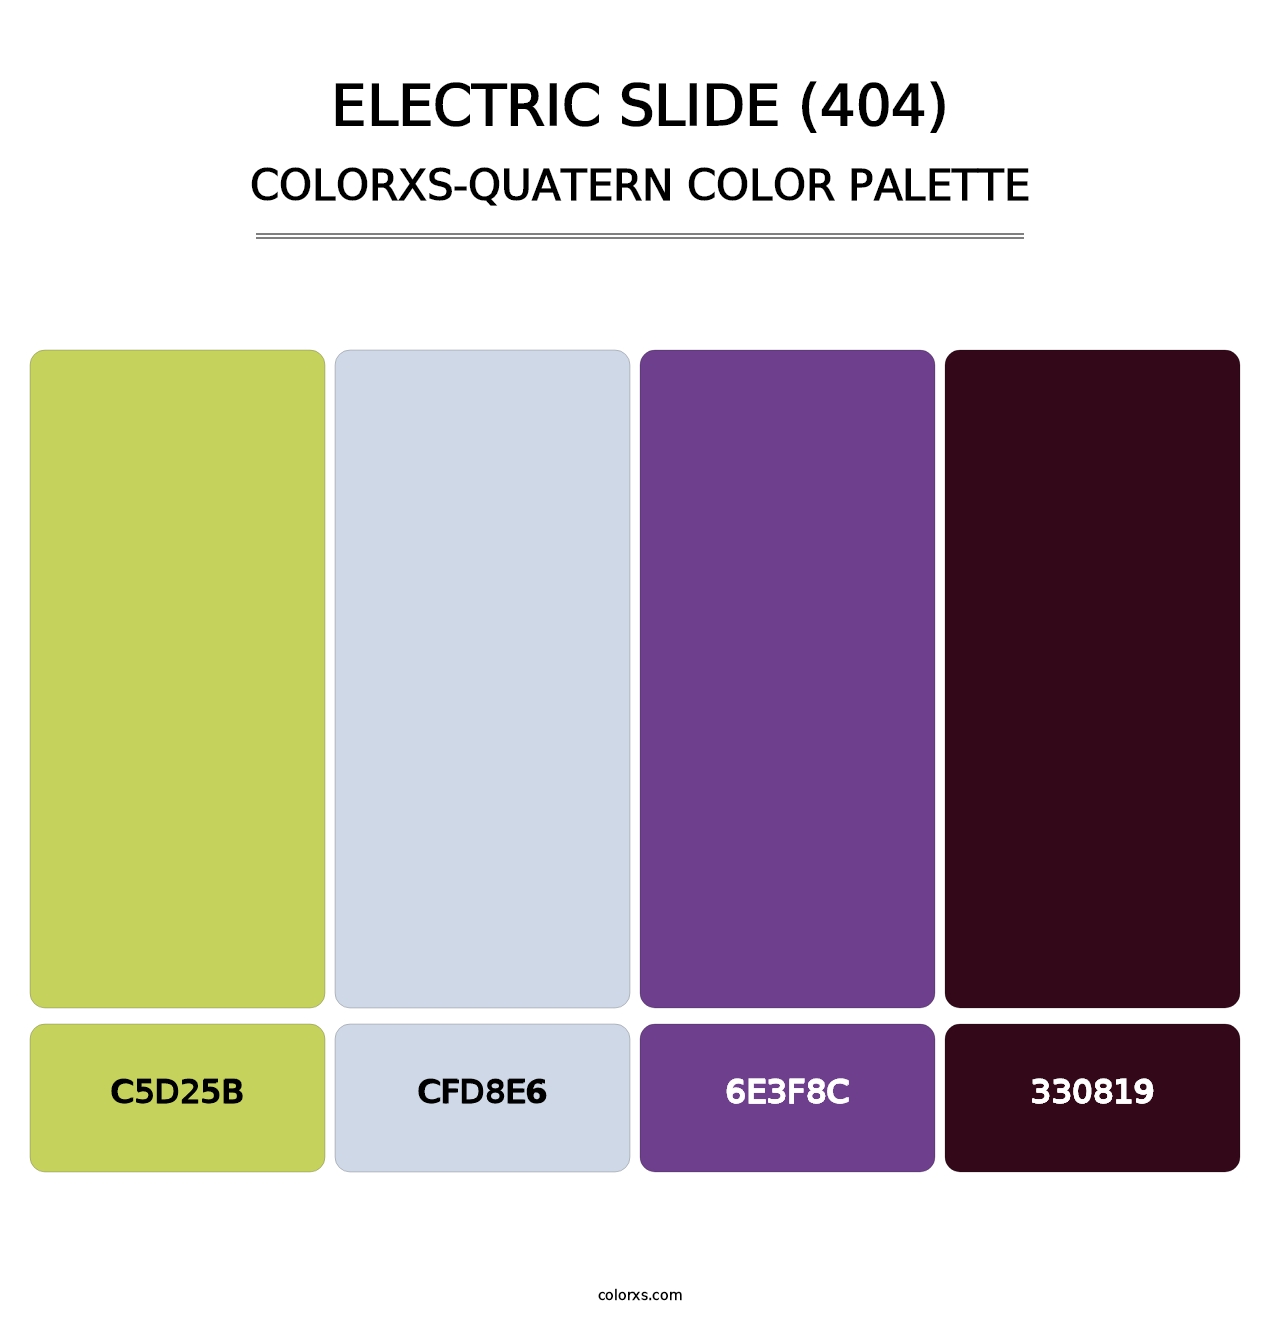 Electric Slide (404) - Colorxs Quatern Palette